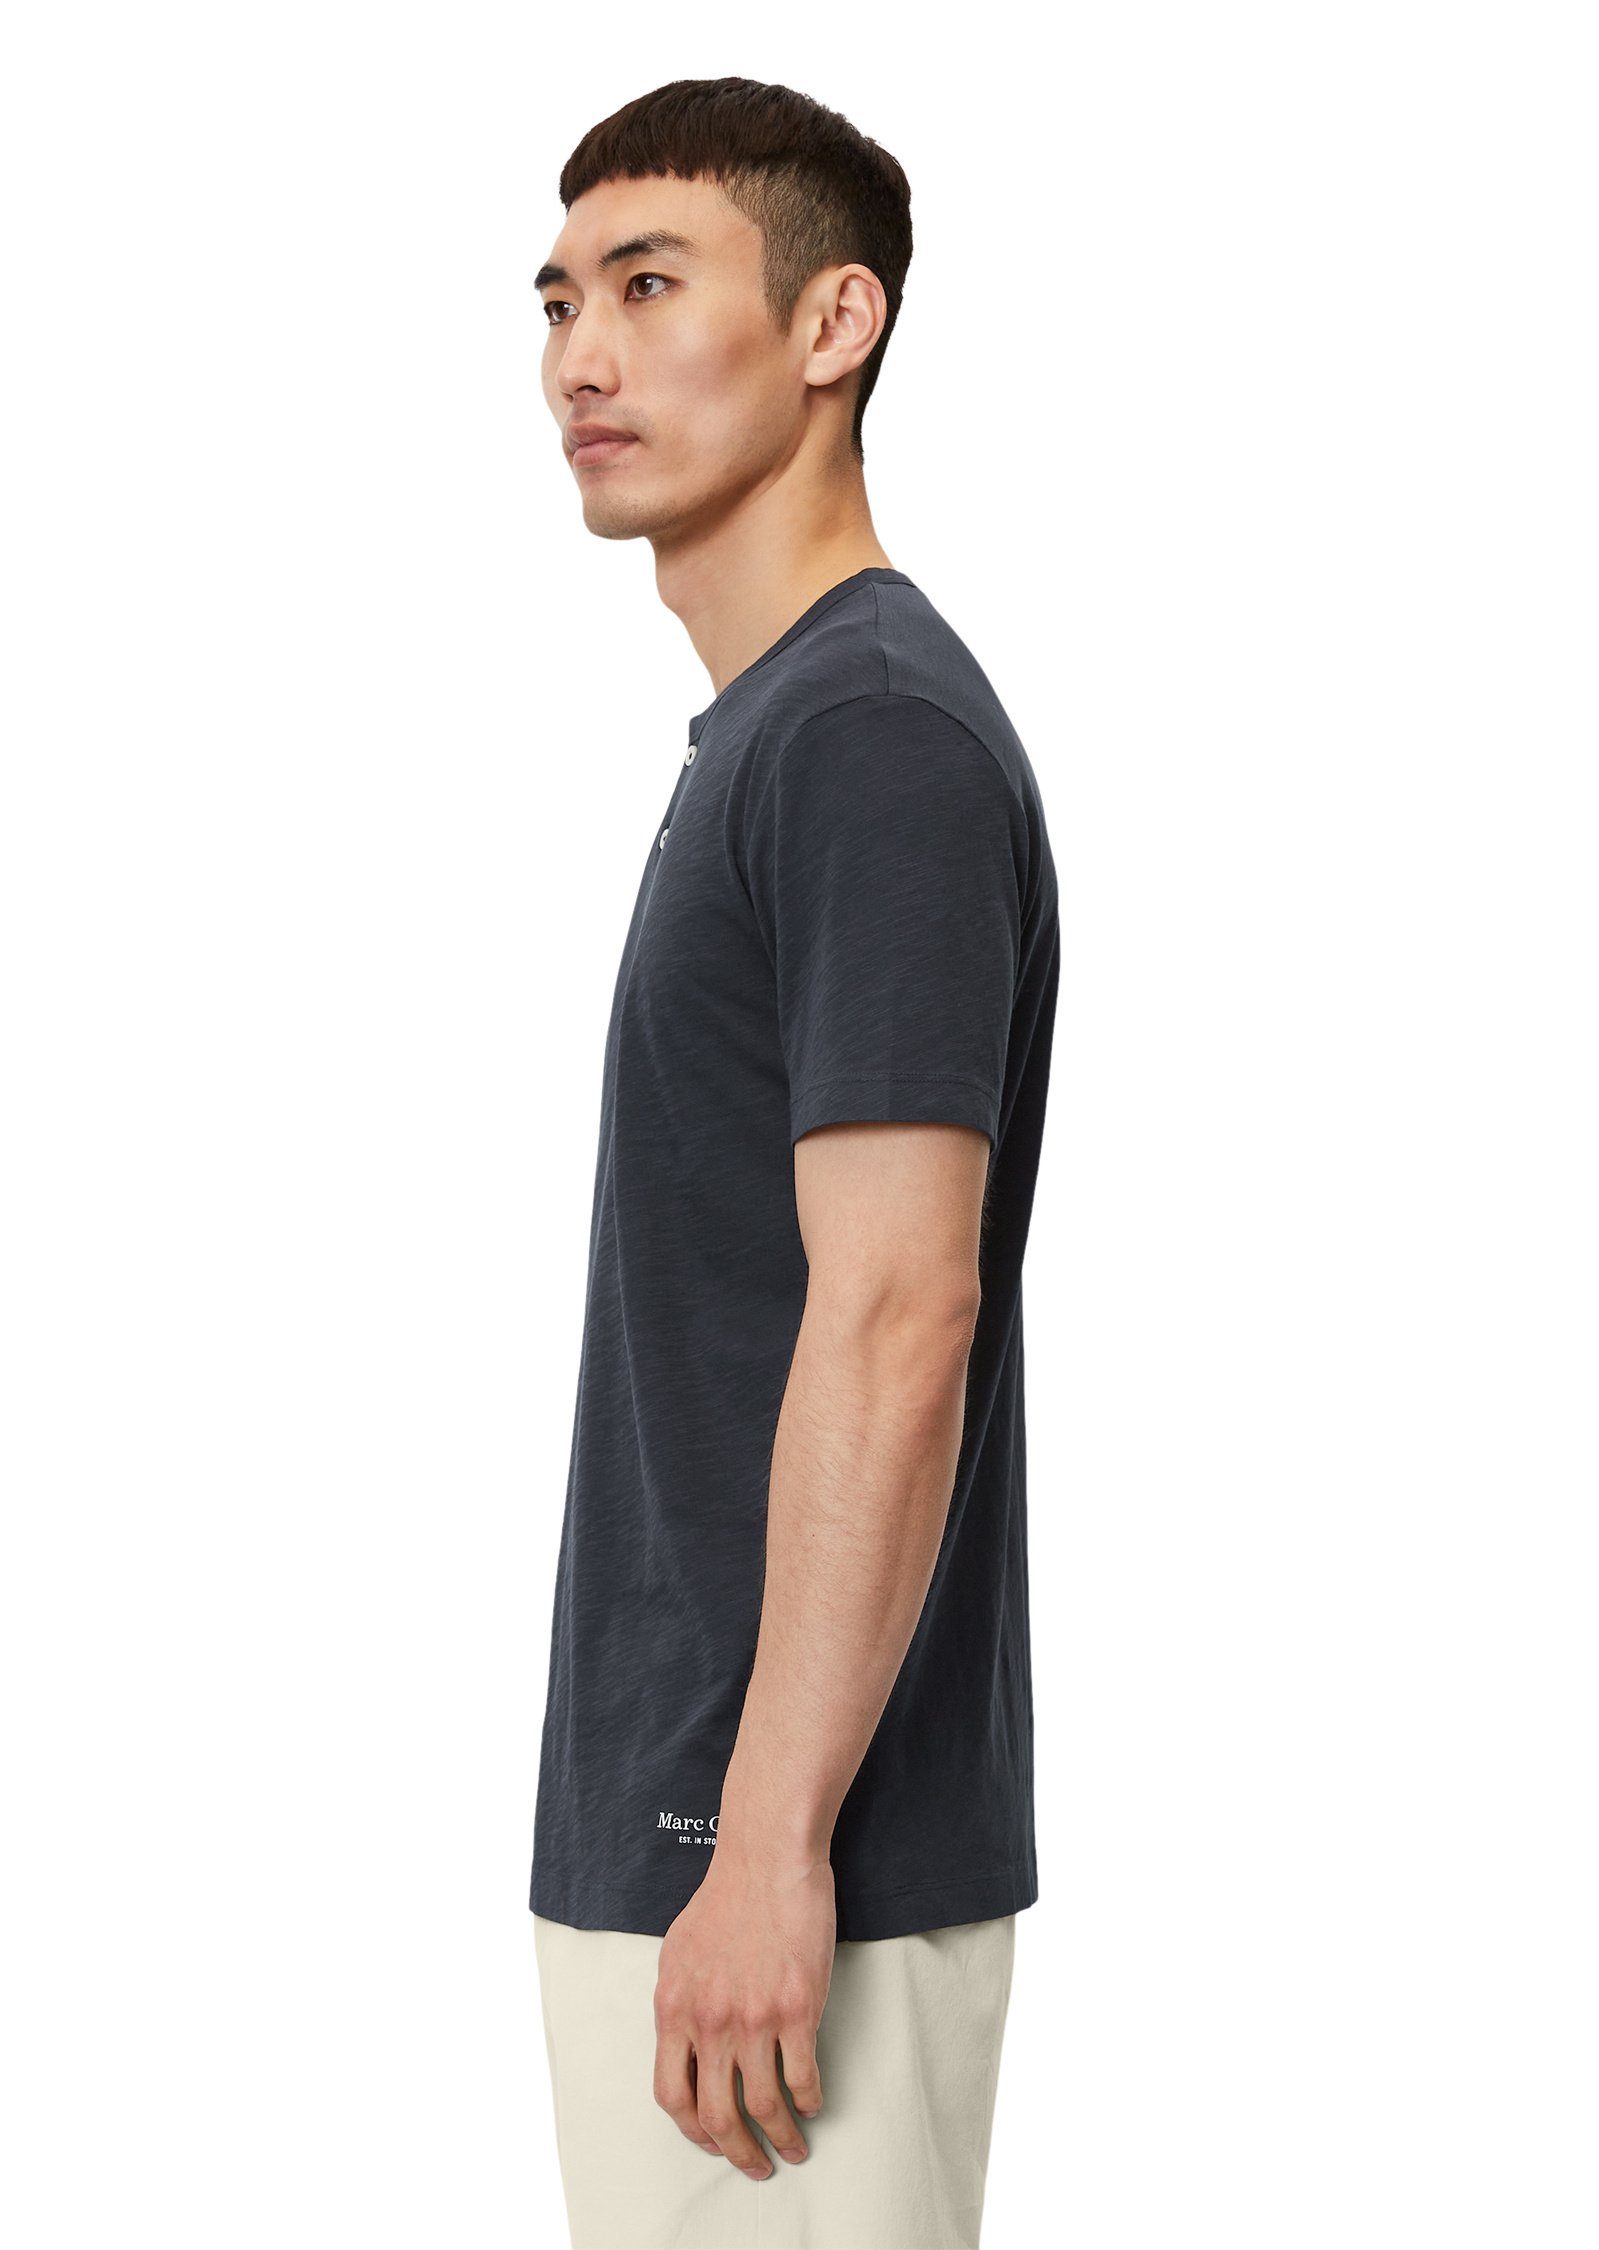 in O'Polo Slub-Jersey-Qualität Marc dunkelblau softer T-Shirt